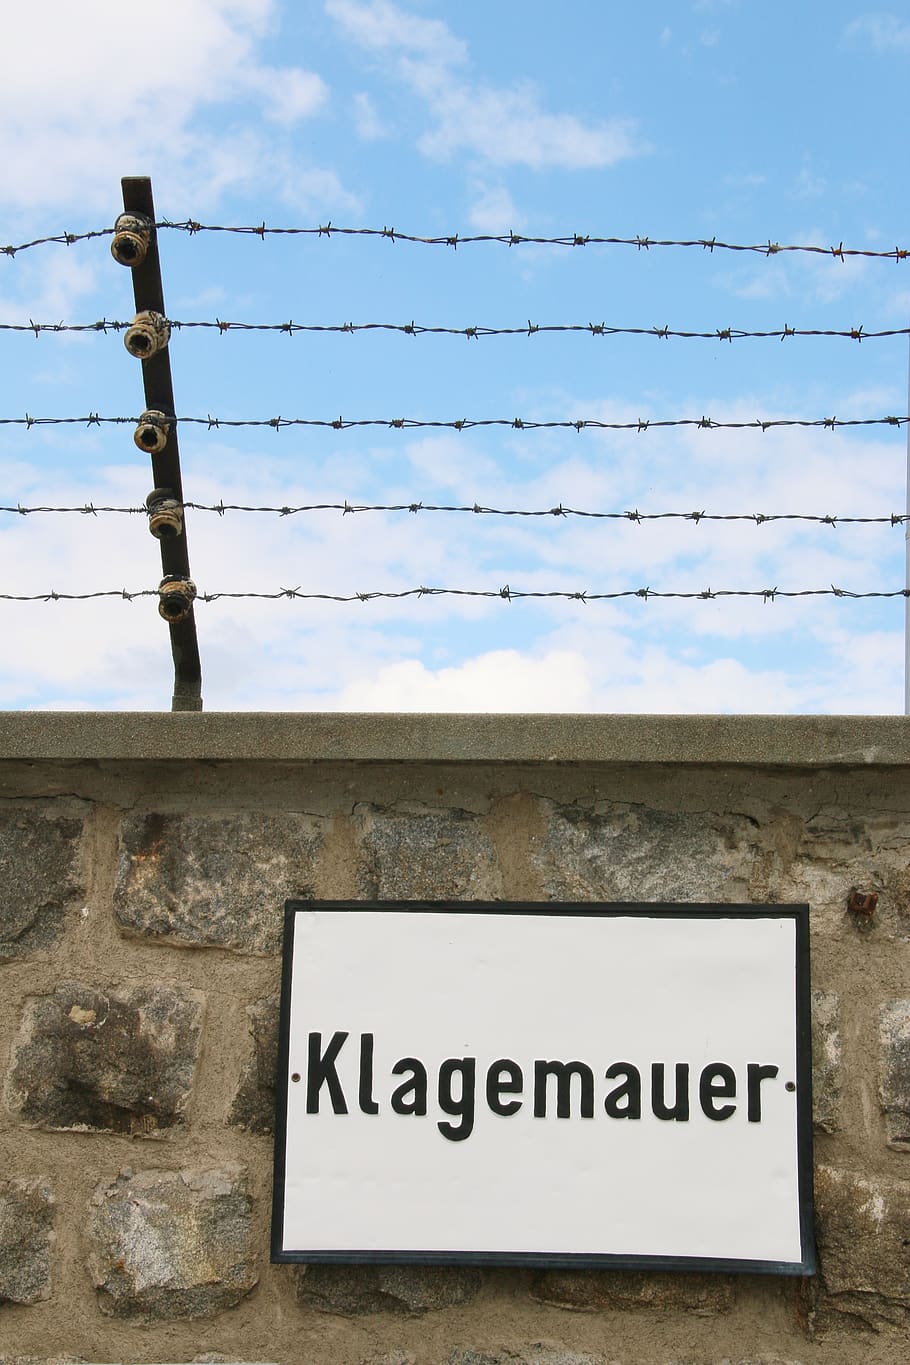 wailing wall, prison, kz, sky, barbed, wire, holocaust, war, jews, genocide